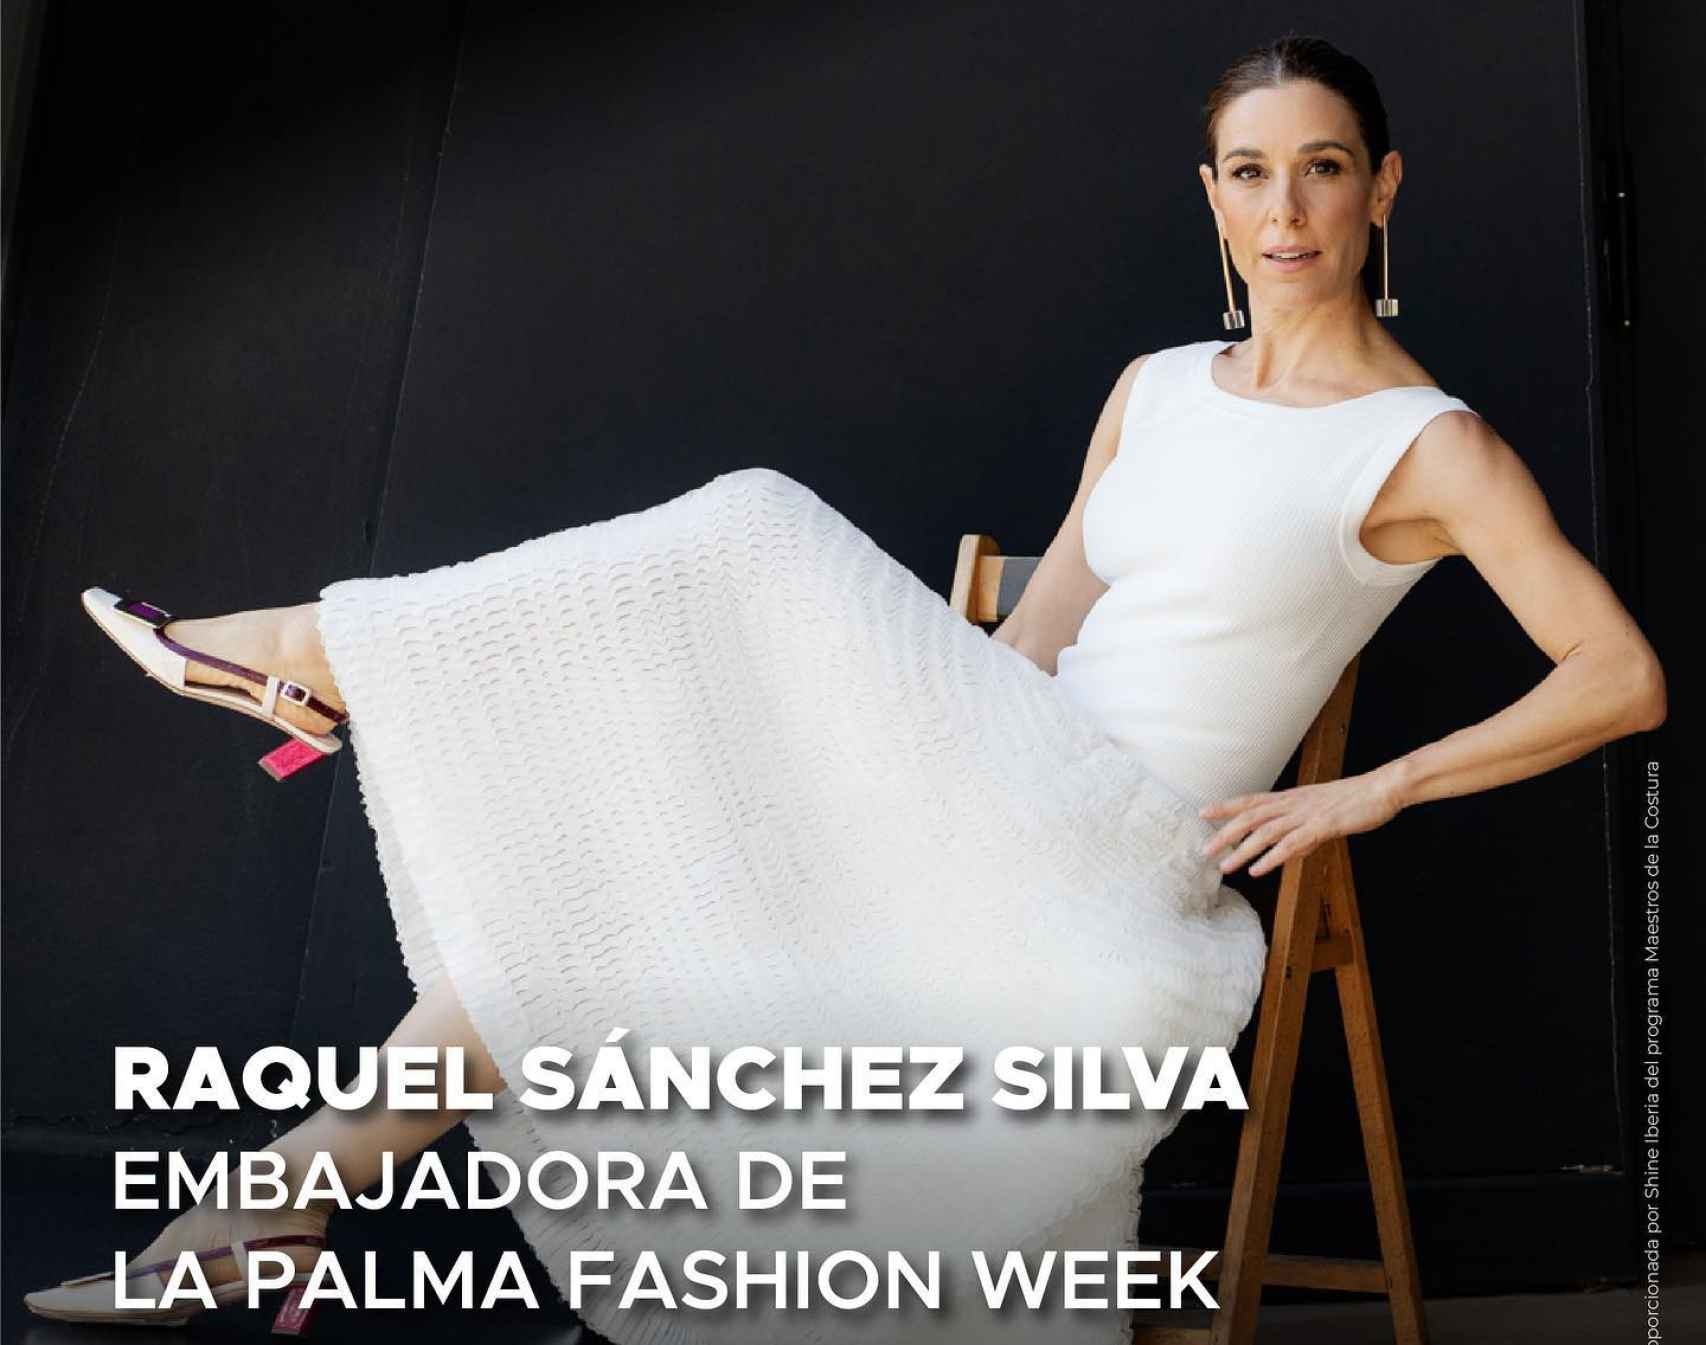 Raquel es la embajadora de la semana de la moda de La Palma.